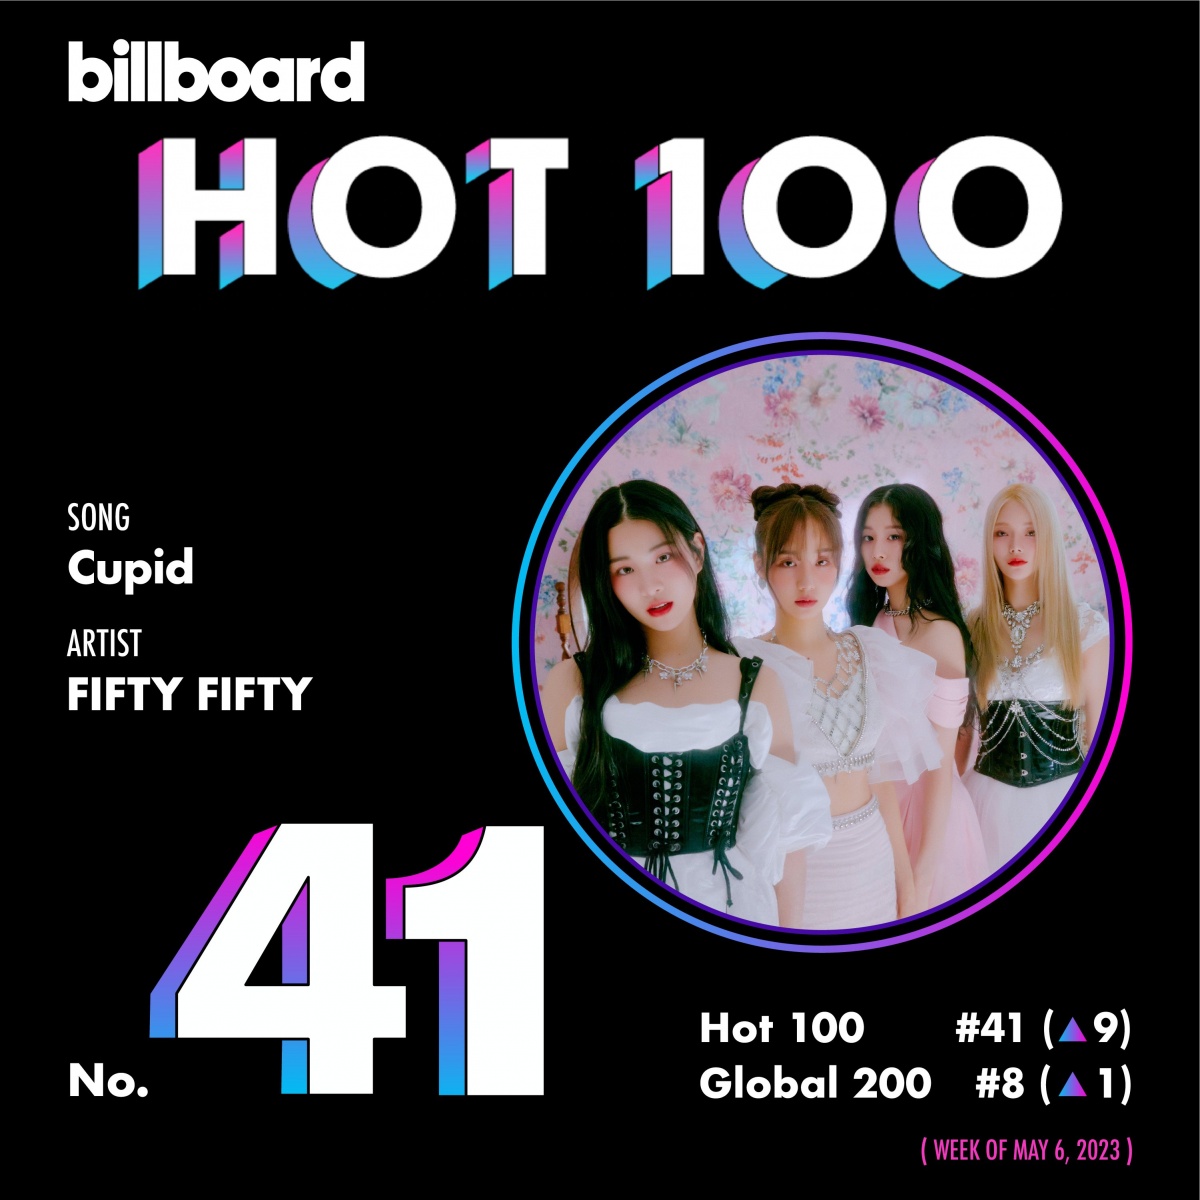 FIFTY FIFTY, US Billboard's main single chart 'Hot 100' 41st... self-renewal